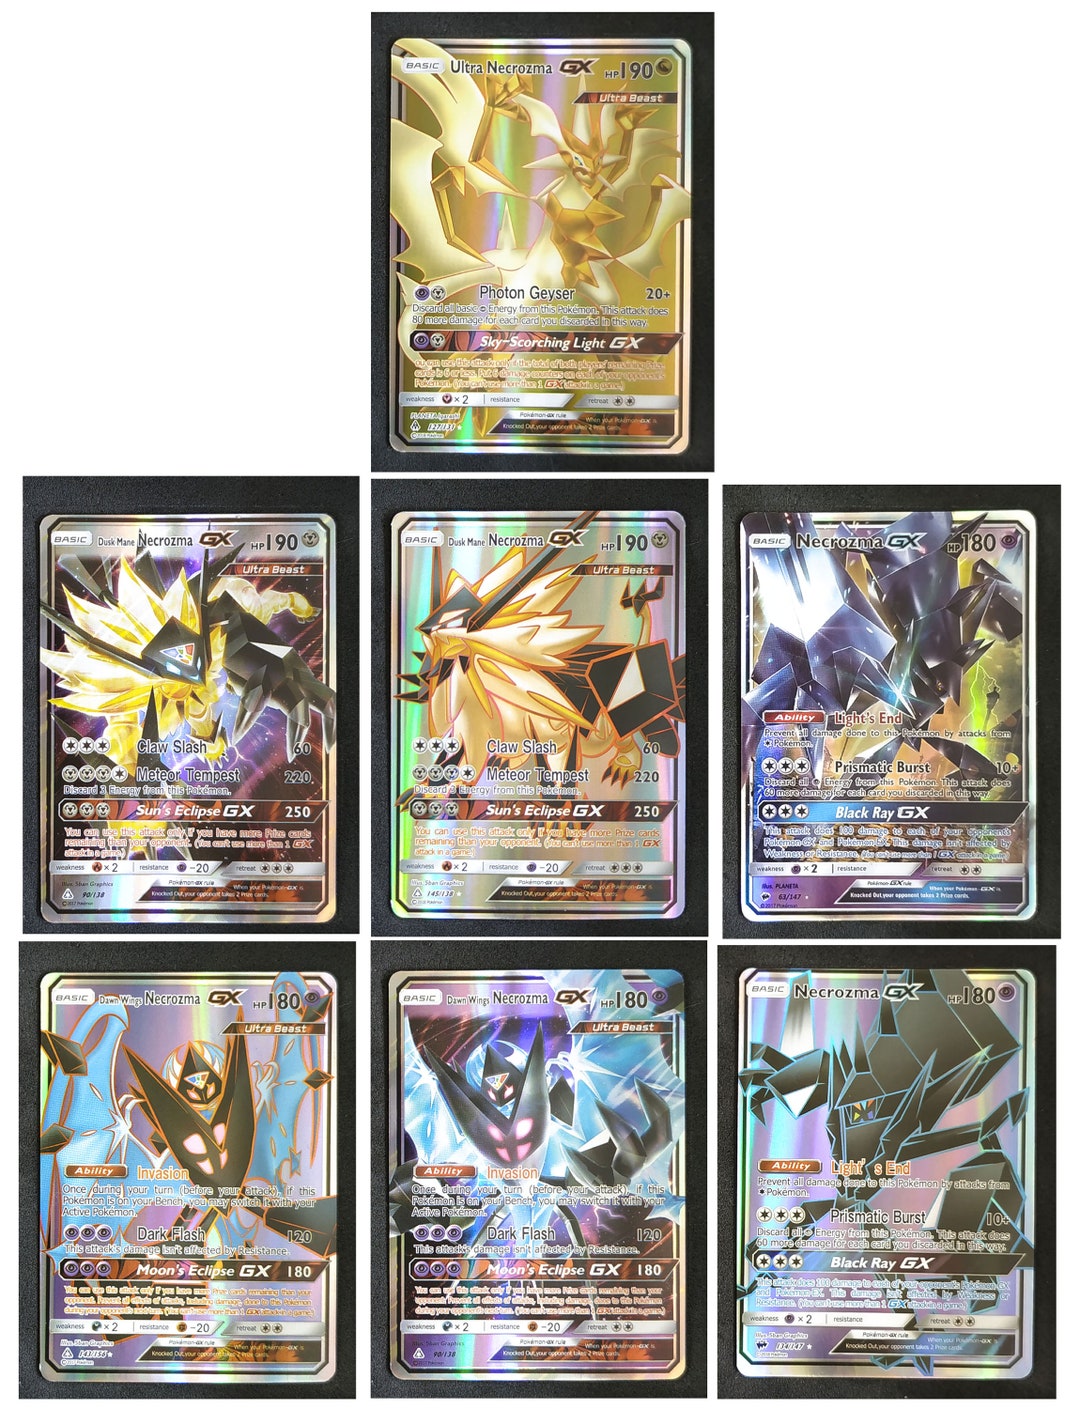 Pokémon Cards: Solgaleo GX (Gold) - Dusk Mane Necrozma GX (Black) - Slugma